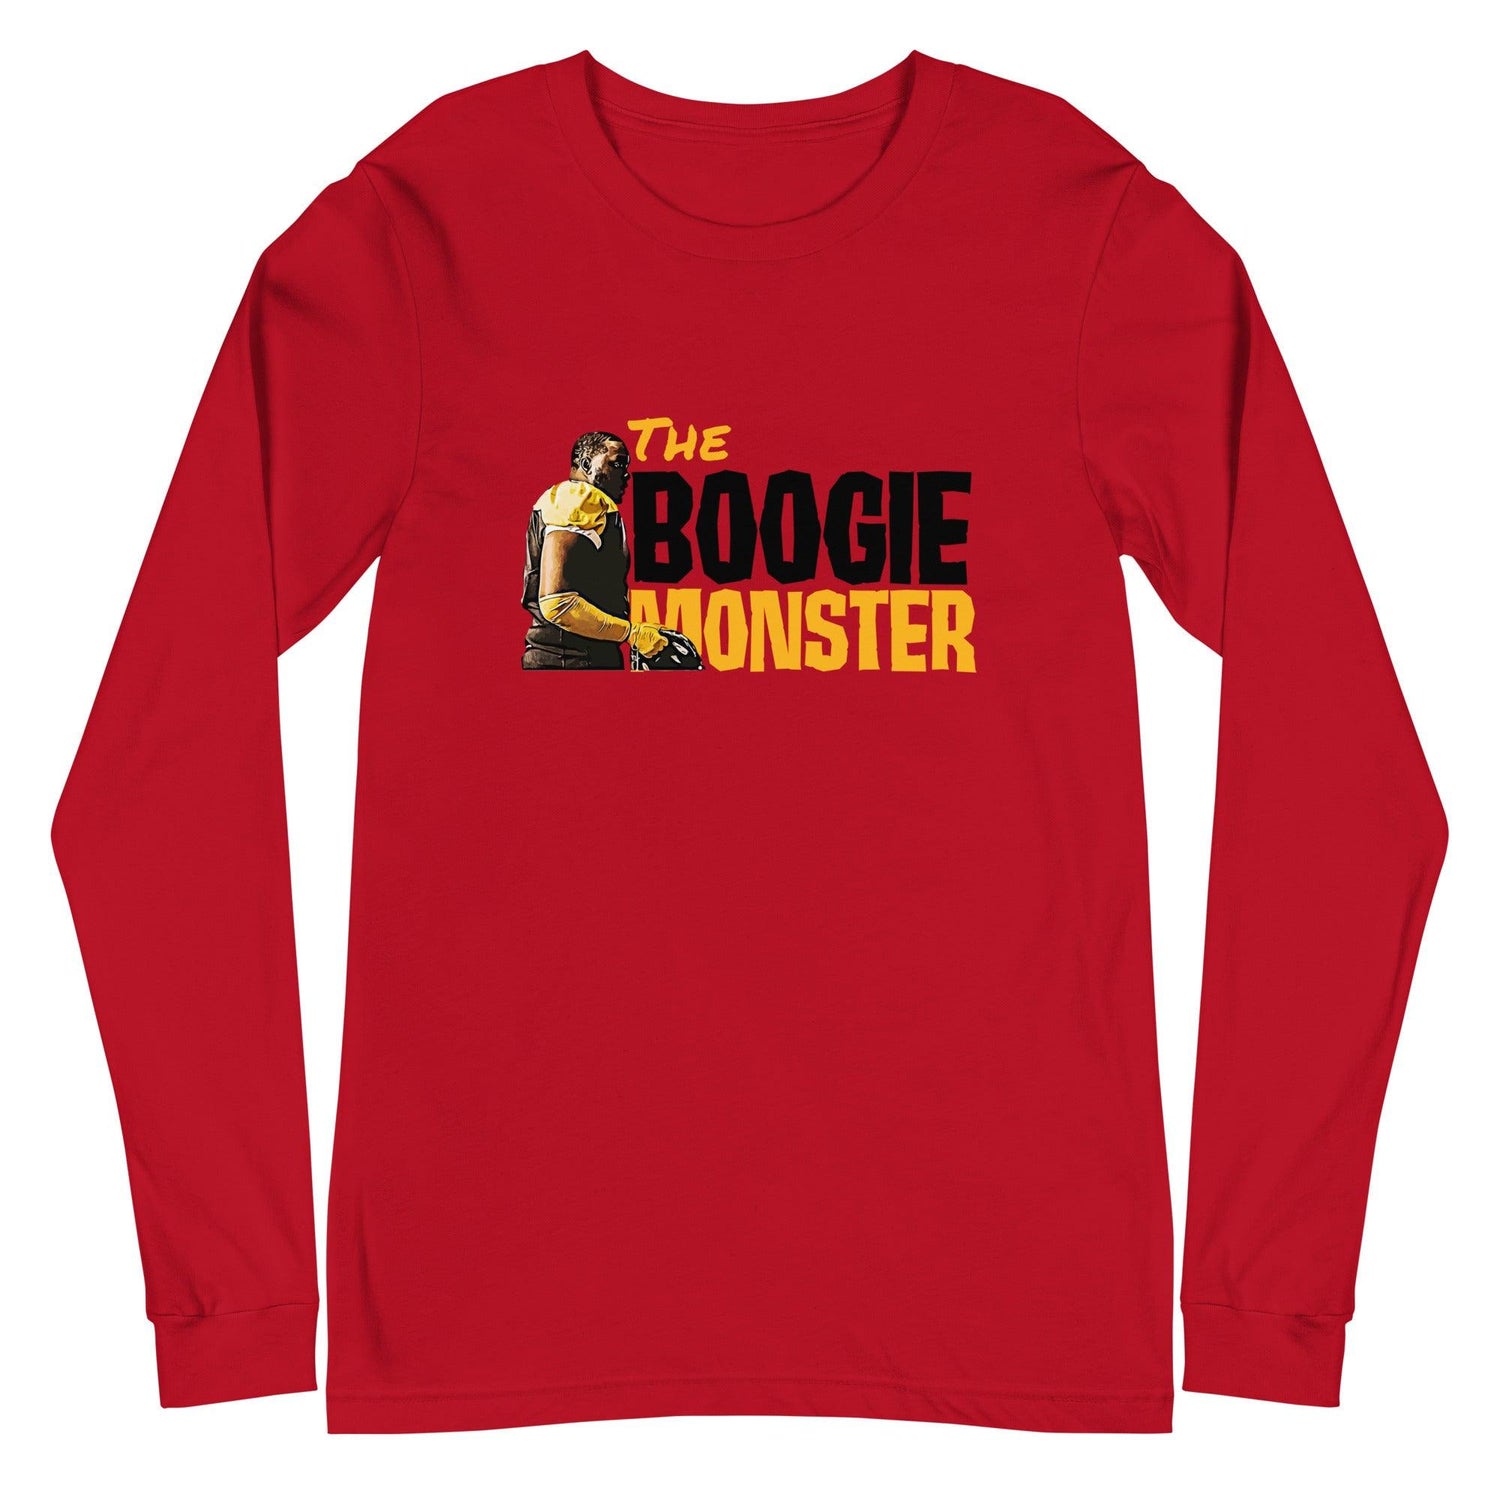 Boogie Roberts "Monster" Long Sleeve Tee - Fan Arch